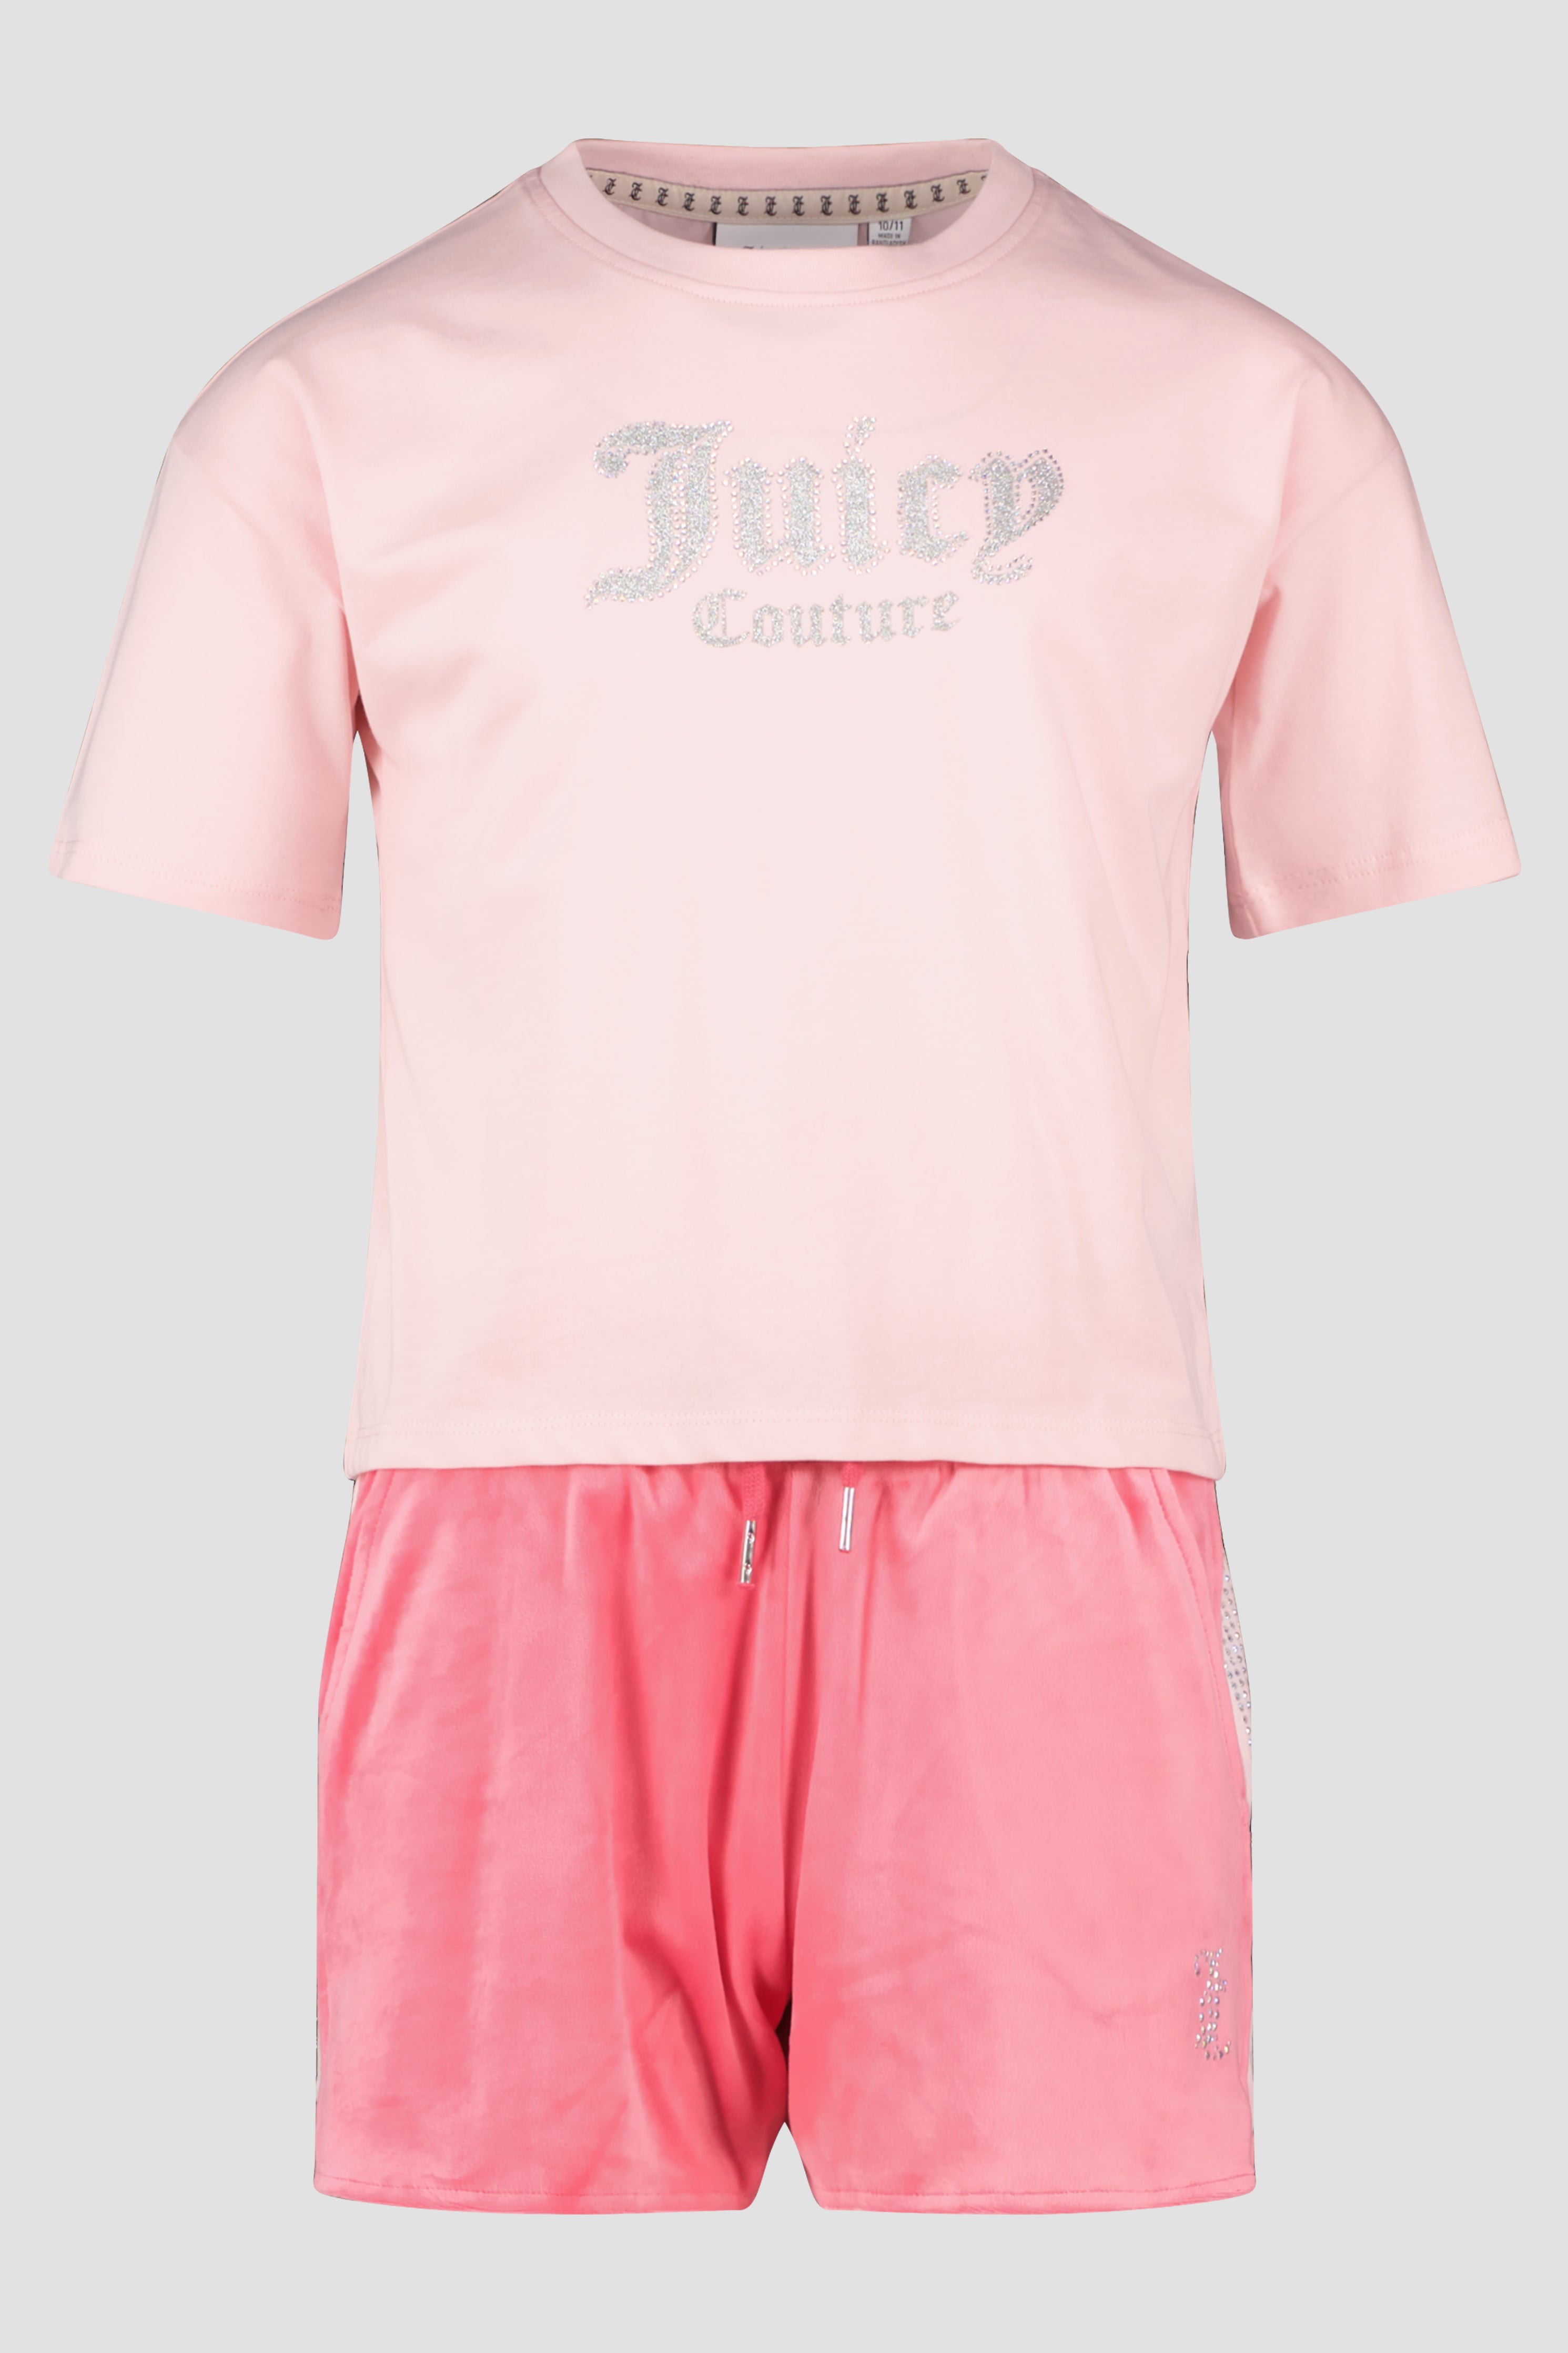 Girls Juicy Couture Pink Diamante T-Shirt & Runner Short Set